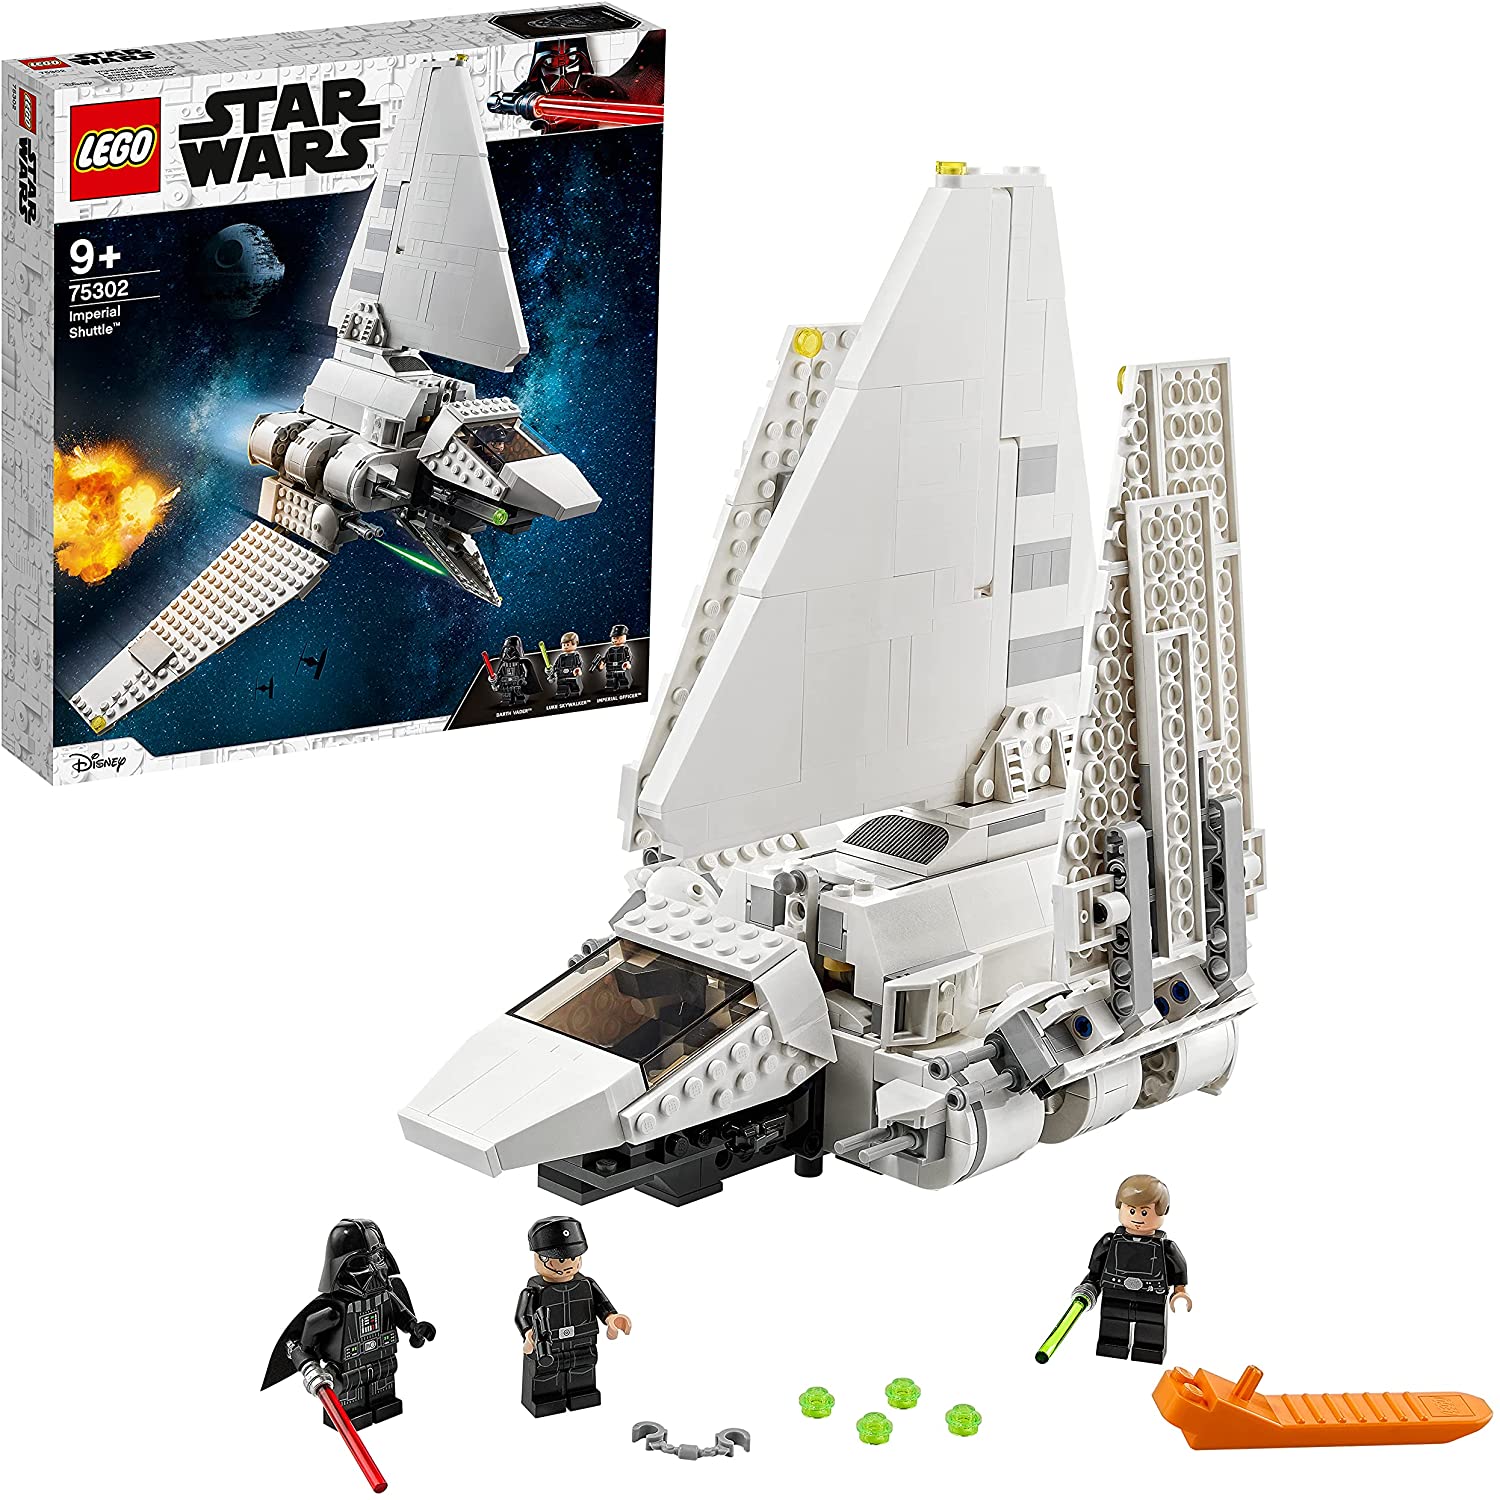 LEGO 75302 Star Wars Imperial Shuttle Construction Set with Luke Skywalker 